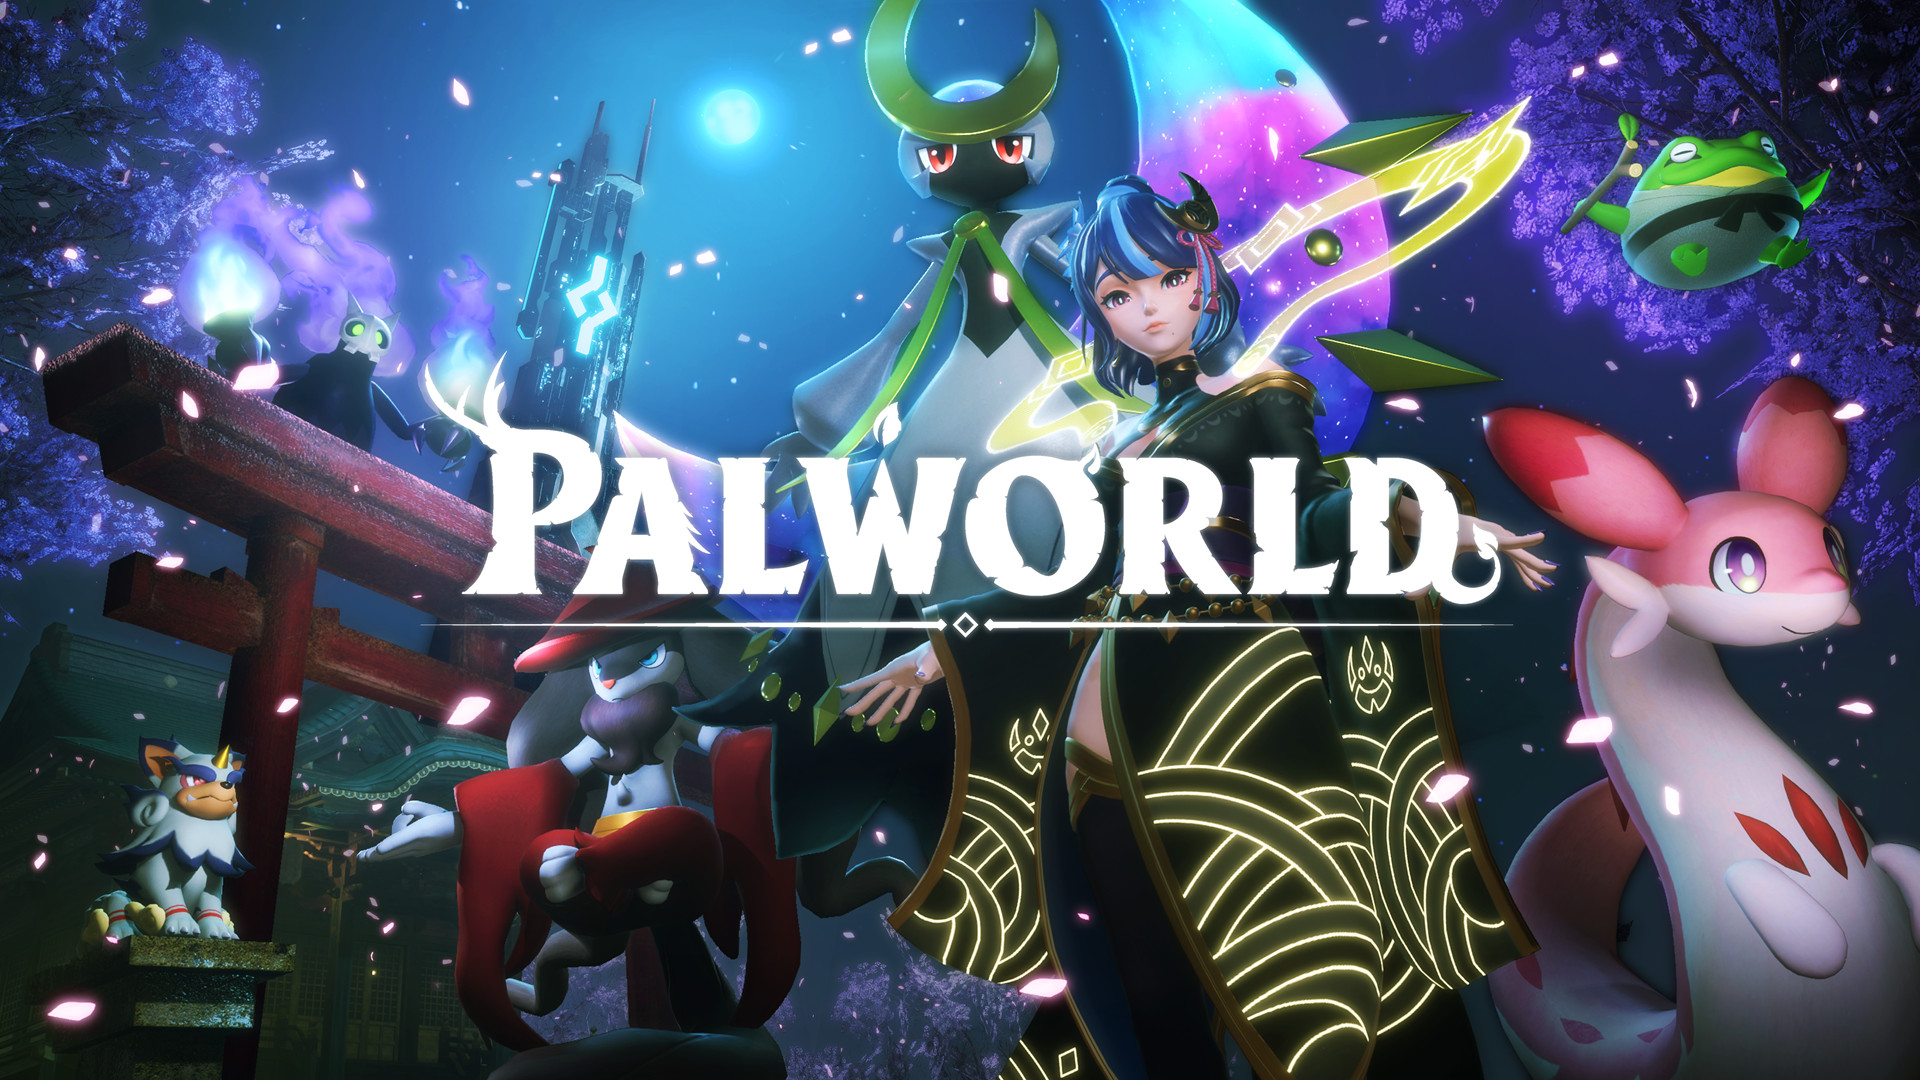 palworld sakurajima update patch notes